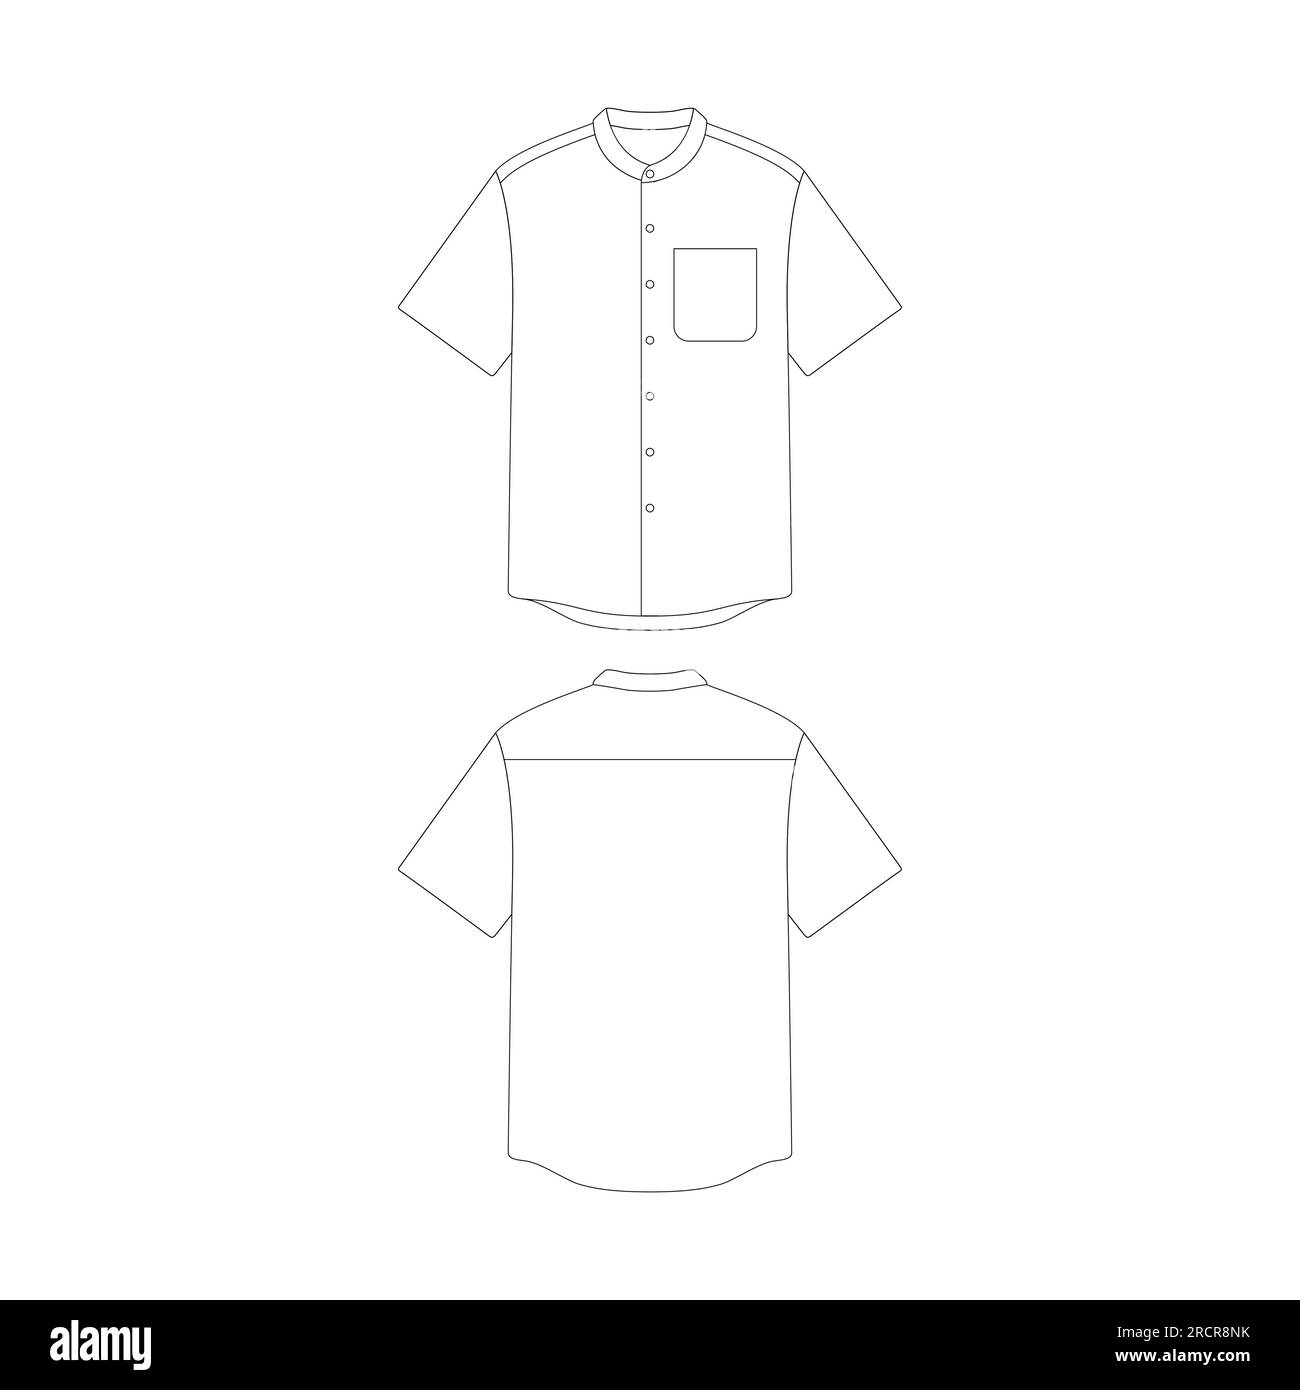 template grandad collar shirt with pocket vector illustration flat ...